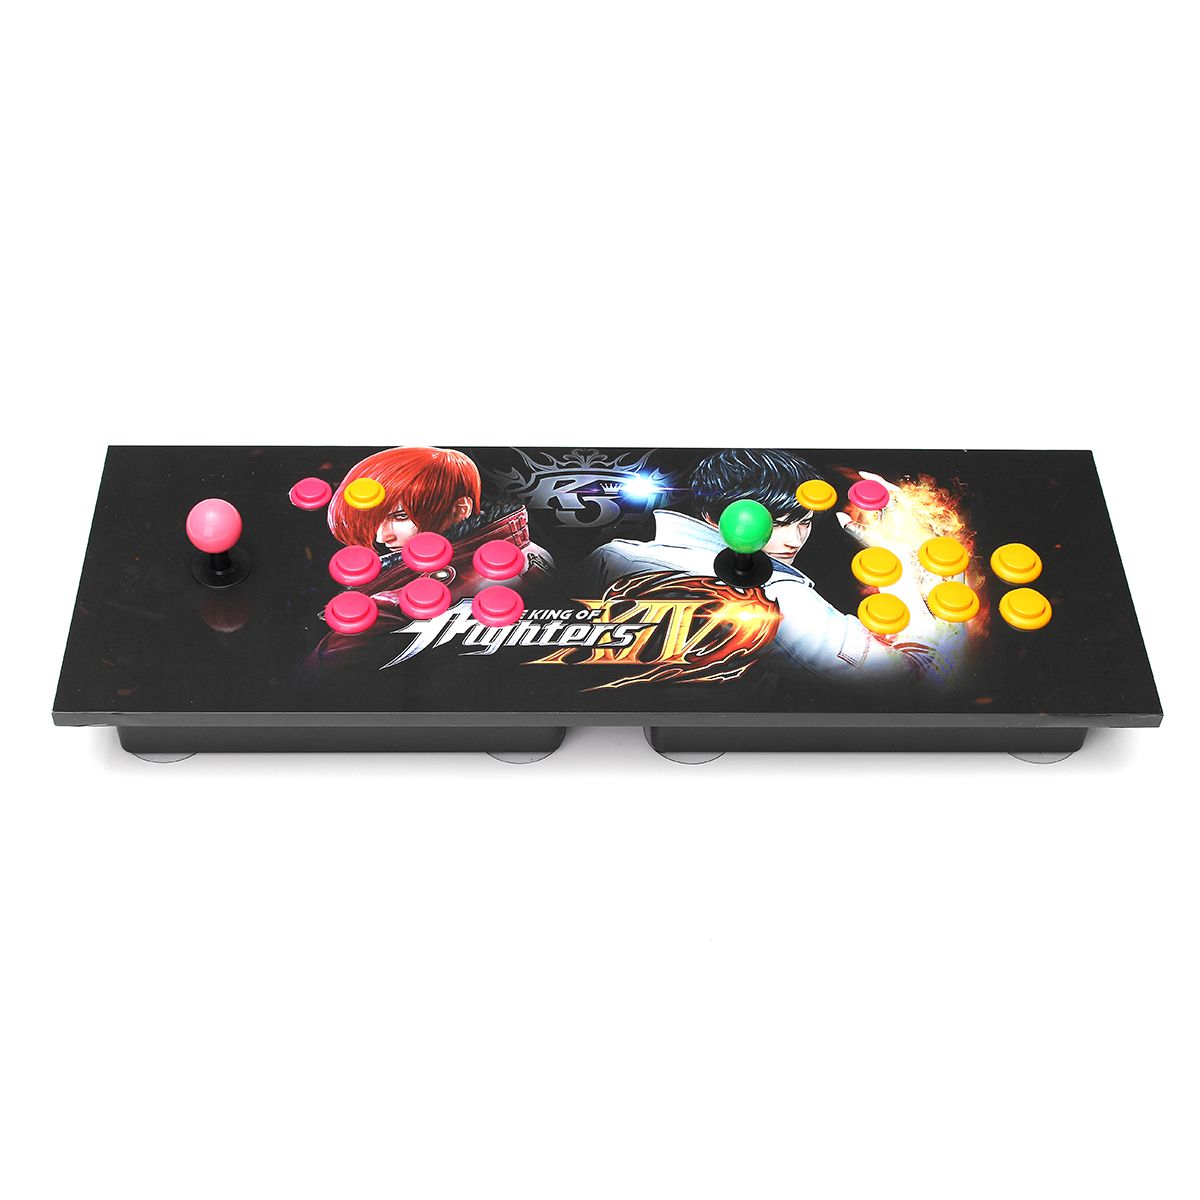 PandoraBox-4S-800-in-1-Dual-Player-Double-Joystick-Arcade-Game-Console-1236479